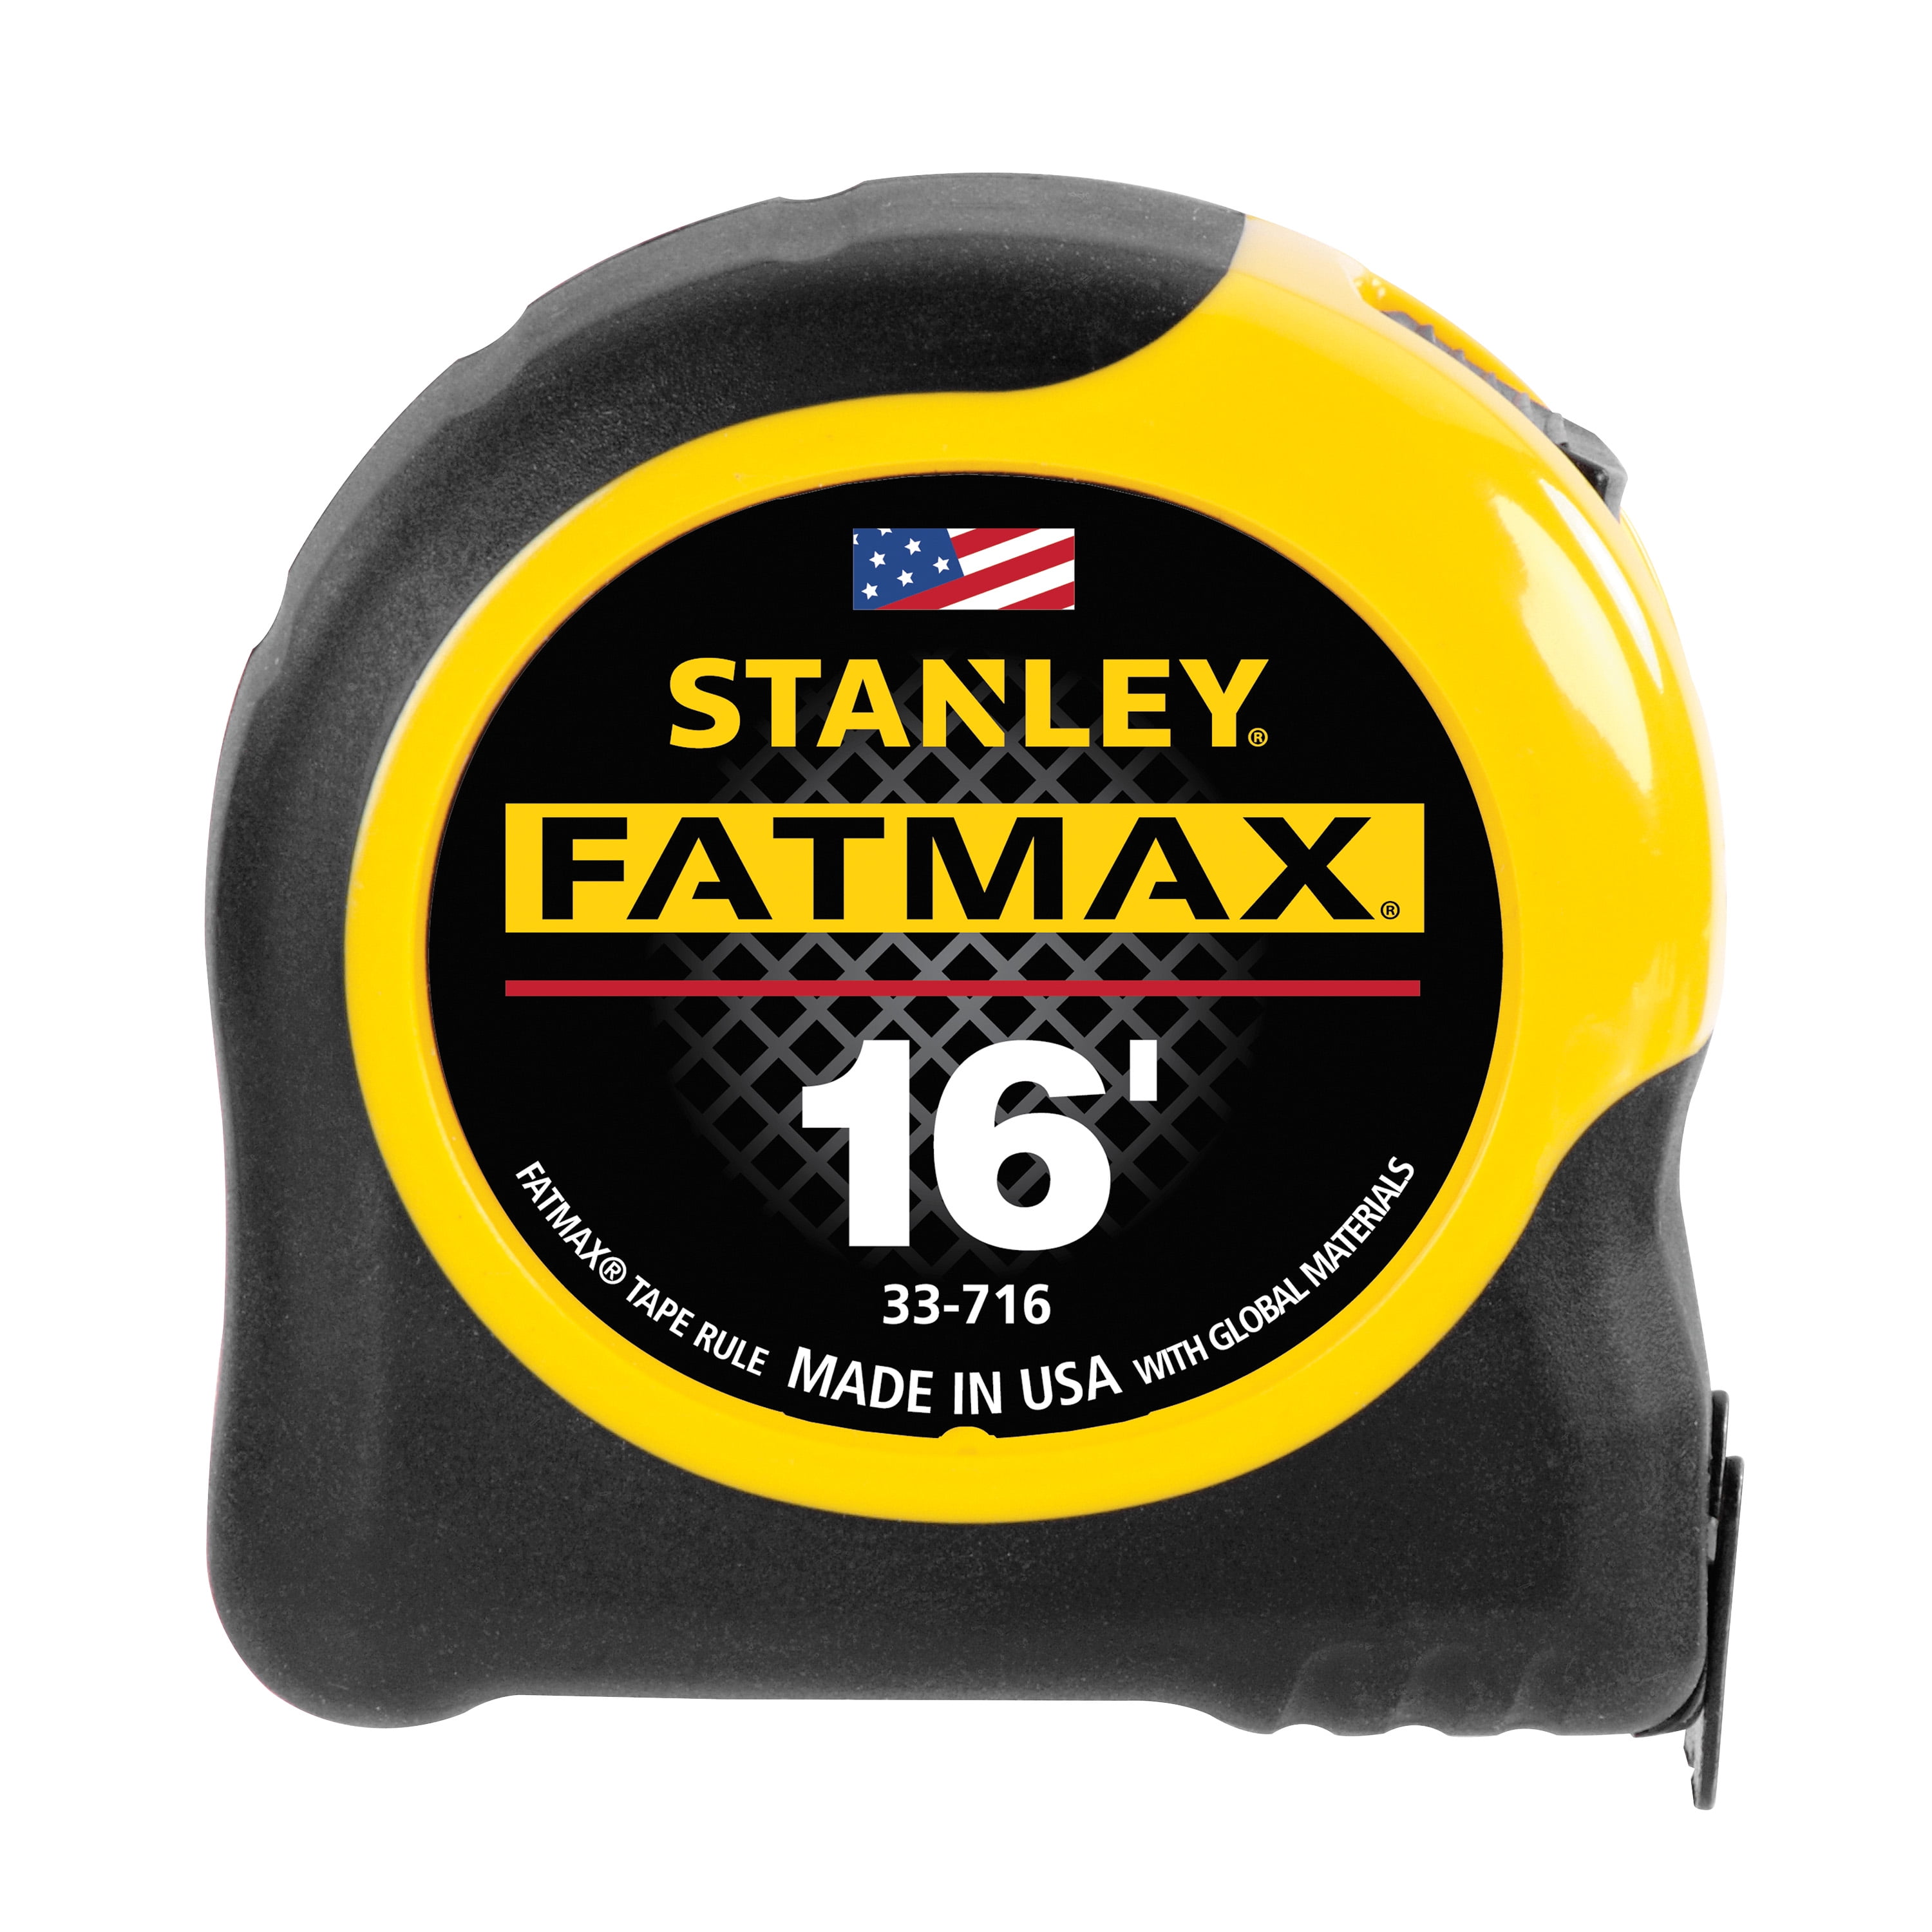 NEW STANLEY 33-735 1 1/4" X 35' FOOT FATMAX POWER RETURN TAPE MEASURE RULER SALE 